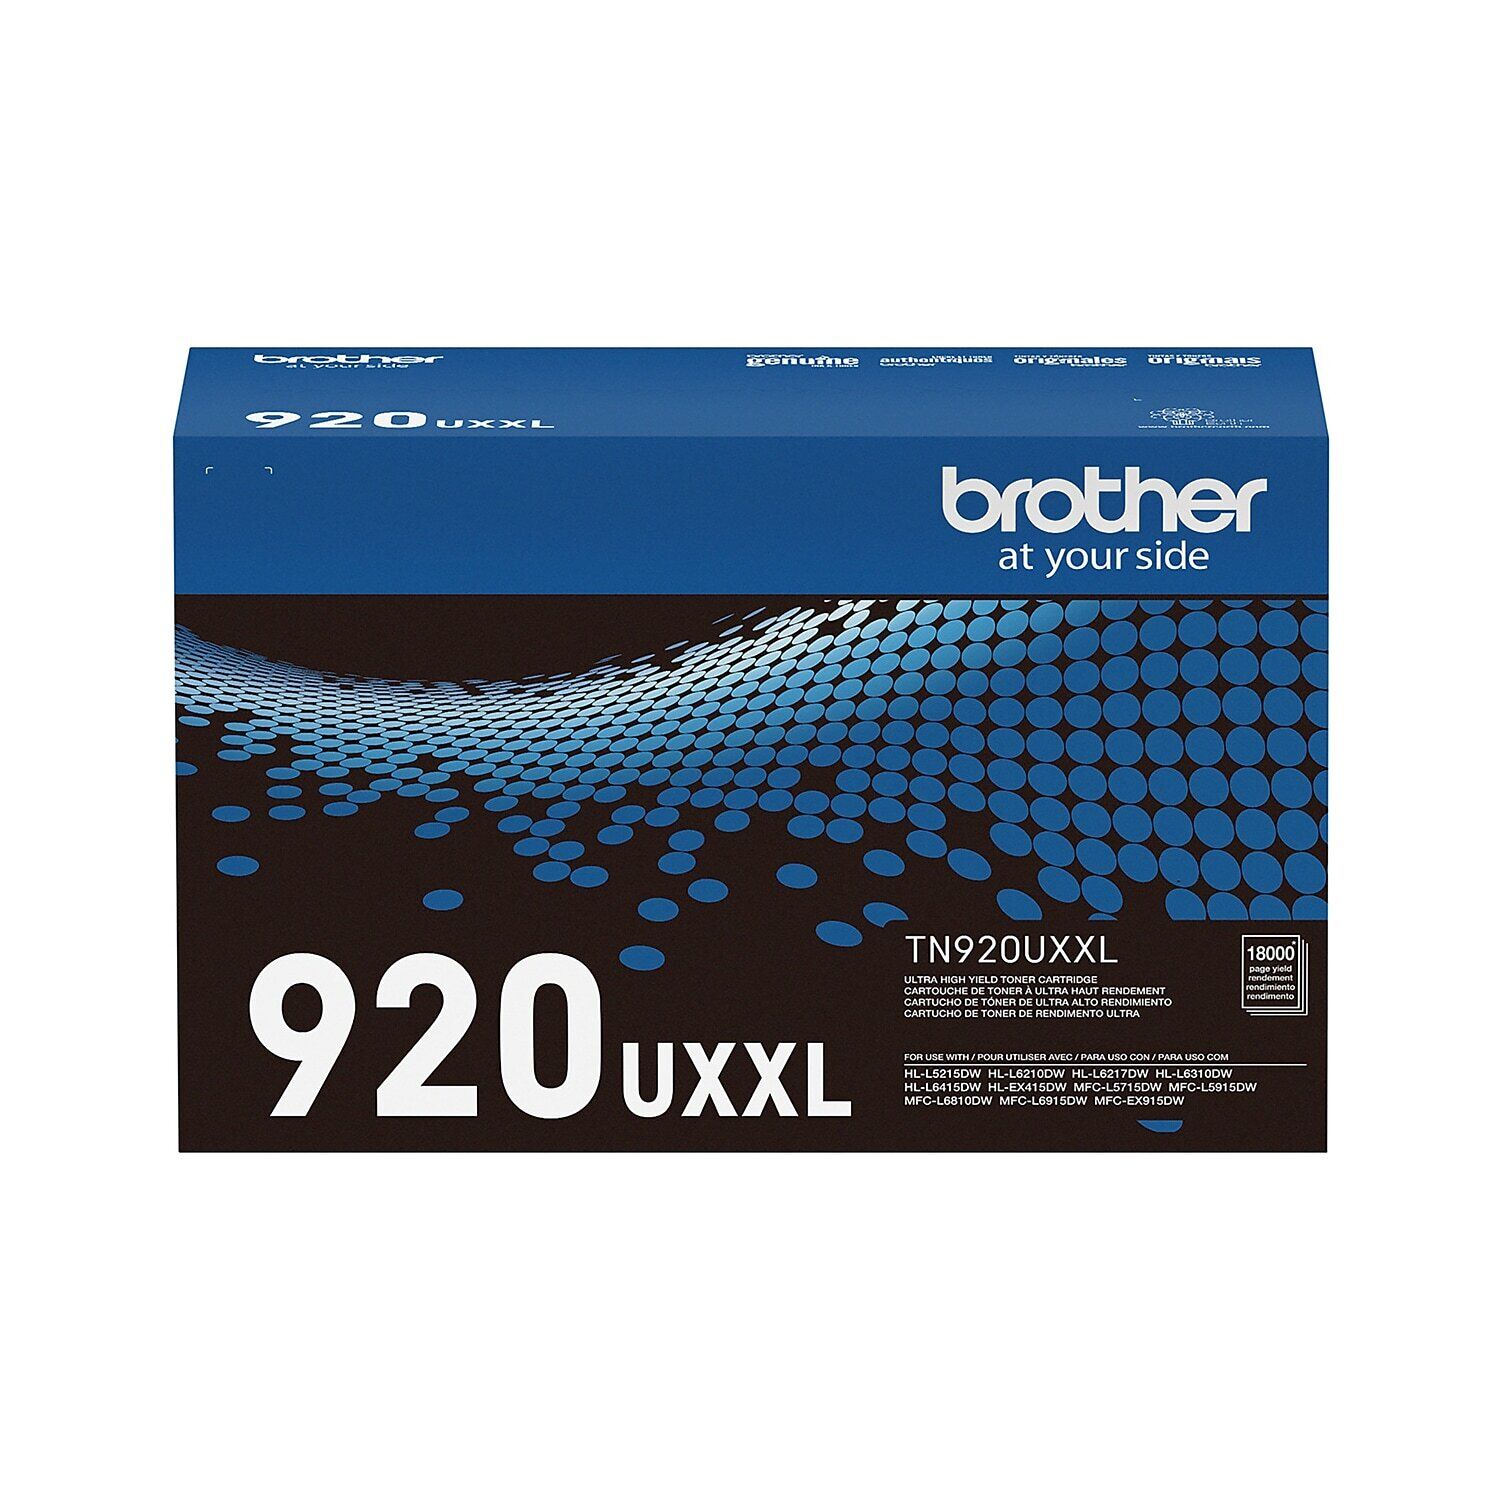 Brother TN920UXXL Black Ultra High Yield Toner Cartridge